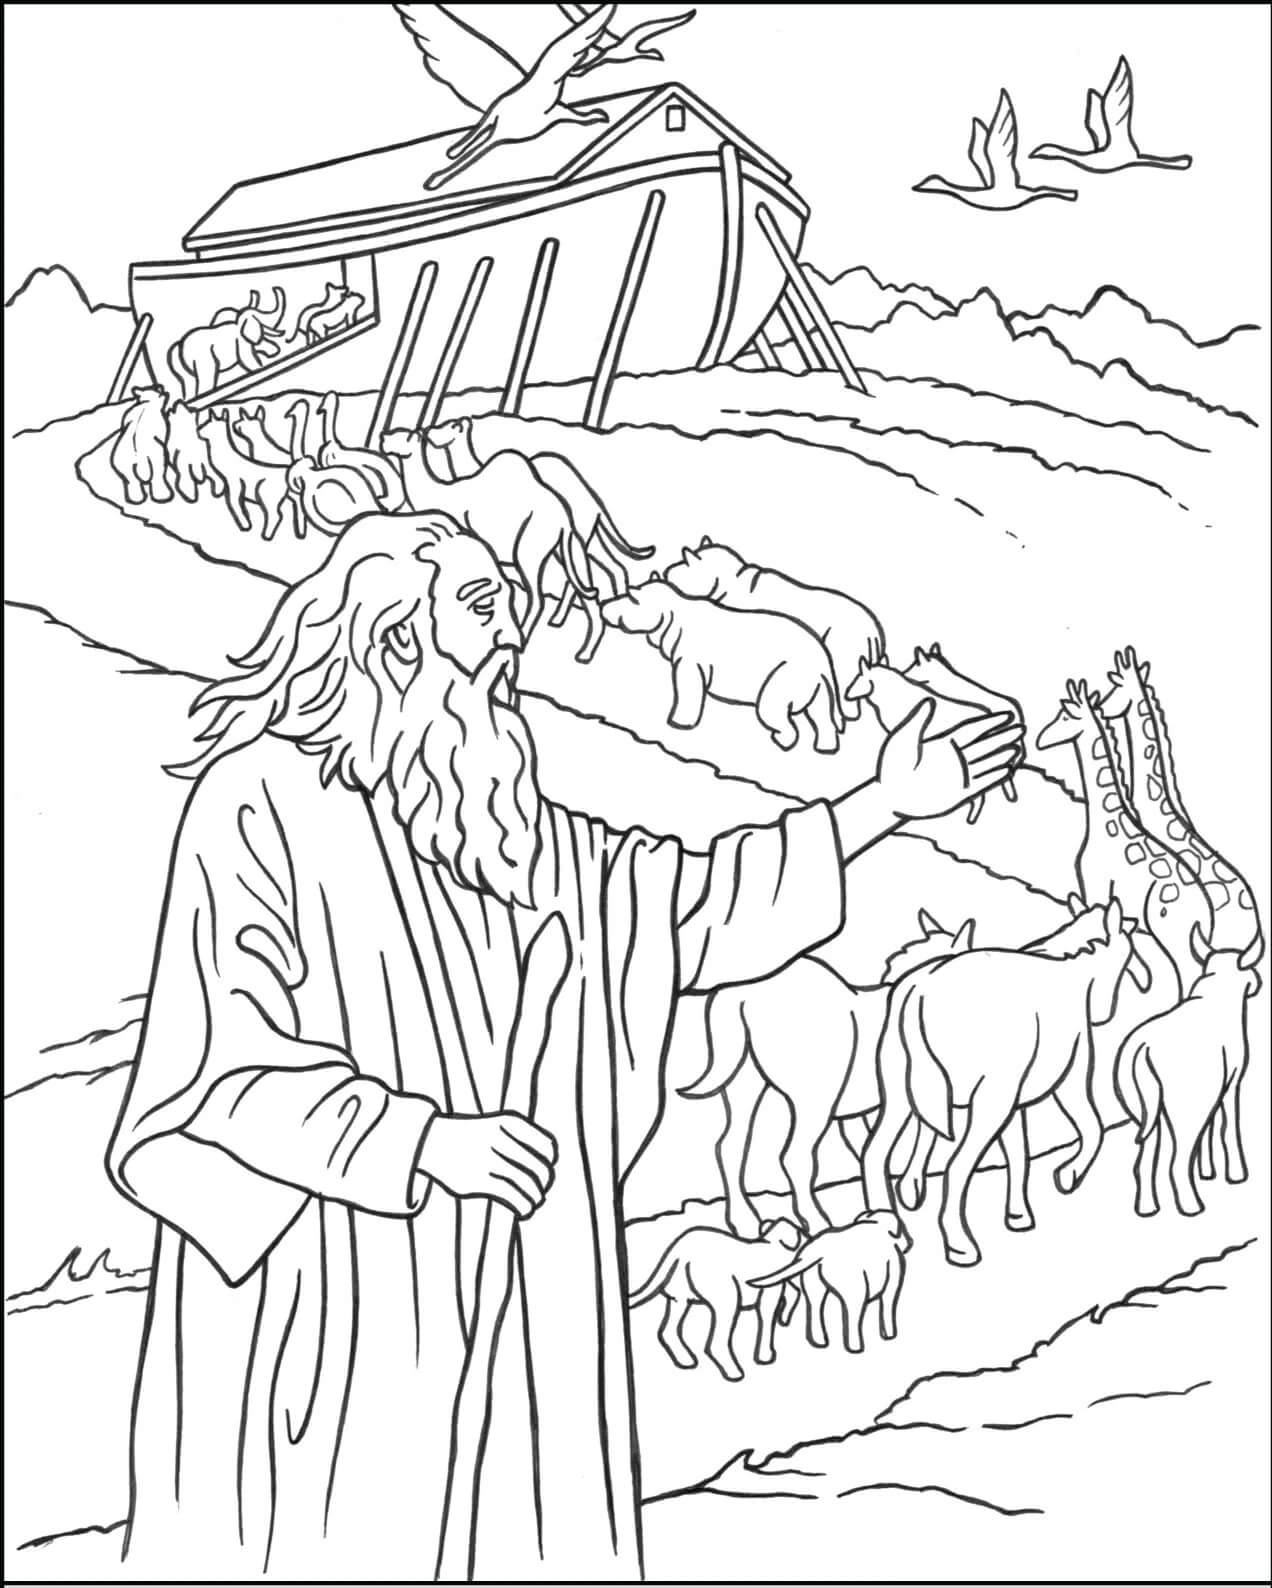 Adorável Arca de Noé para colorir